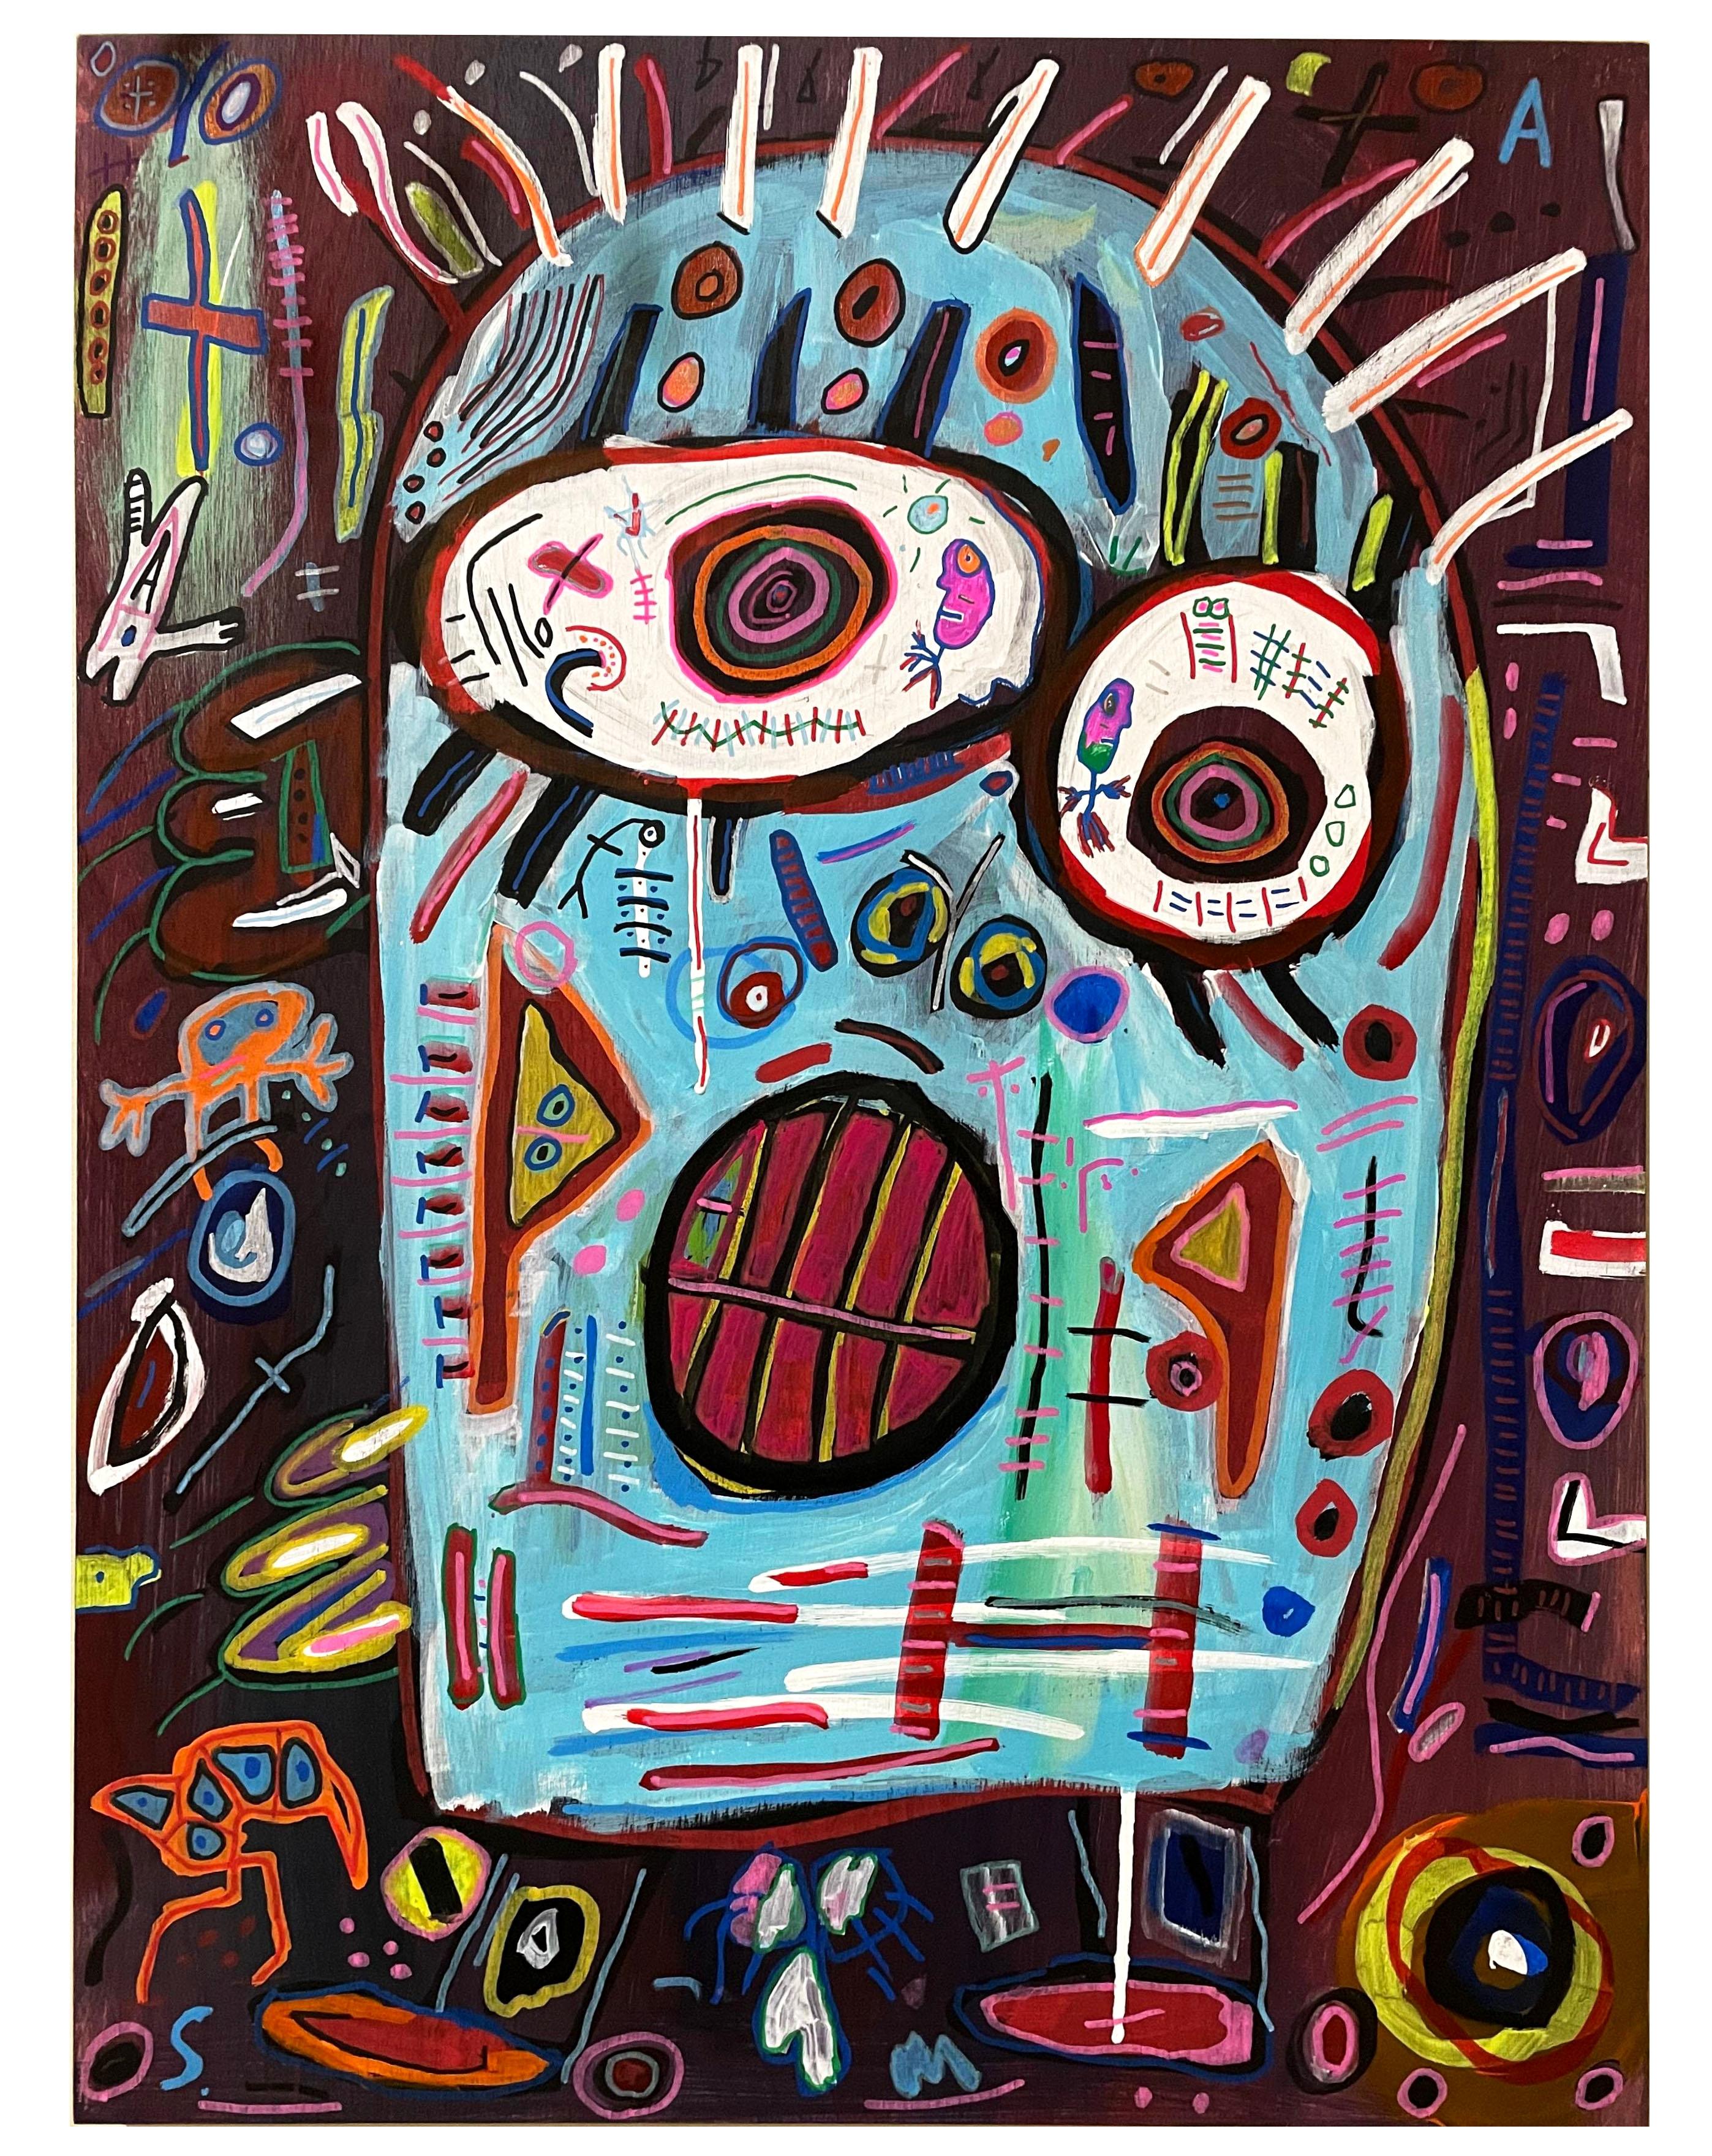 Untitled, colorful, abstract portrait, symbols - Mixed Media Art by Joey Tepedino